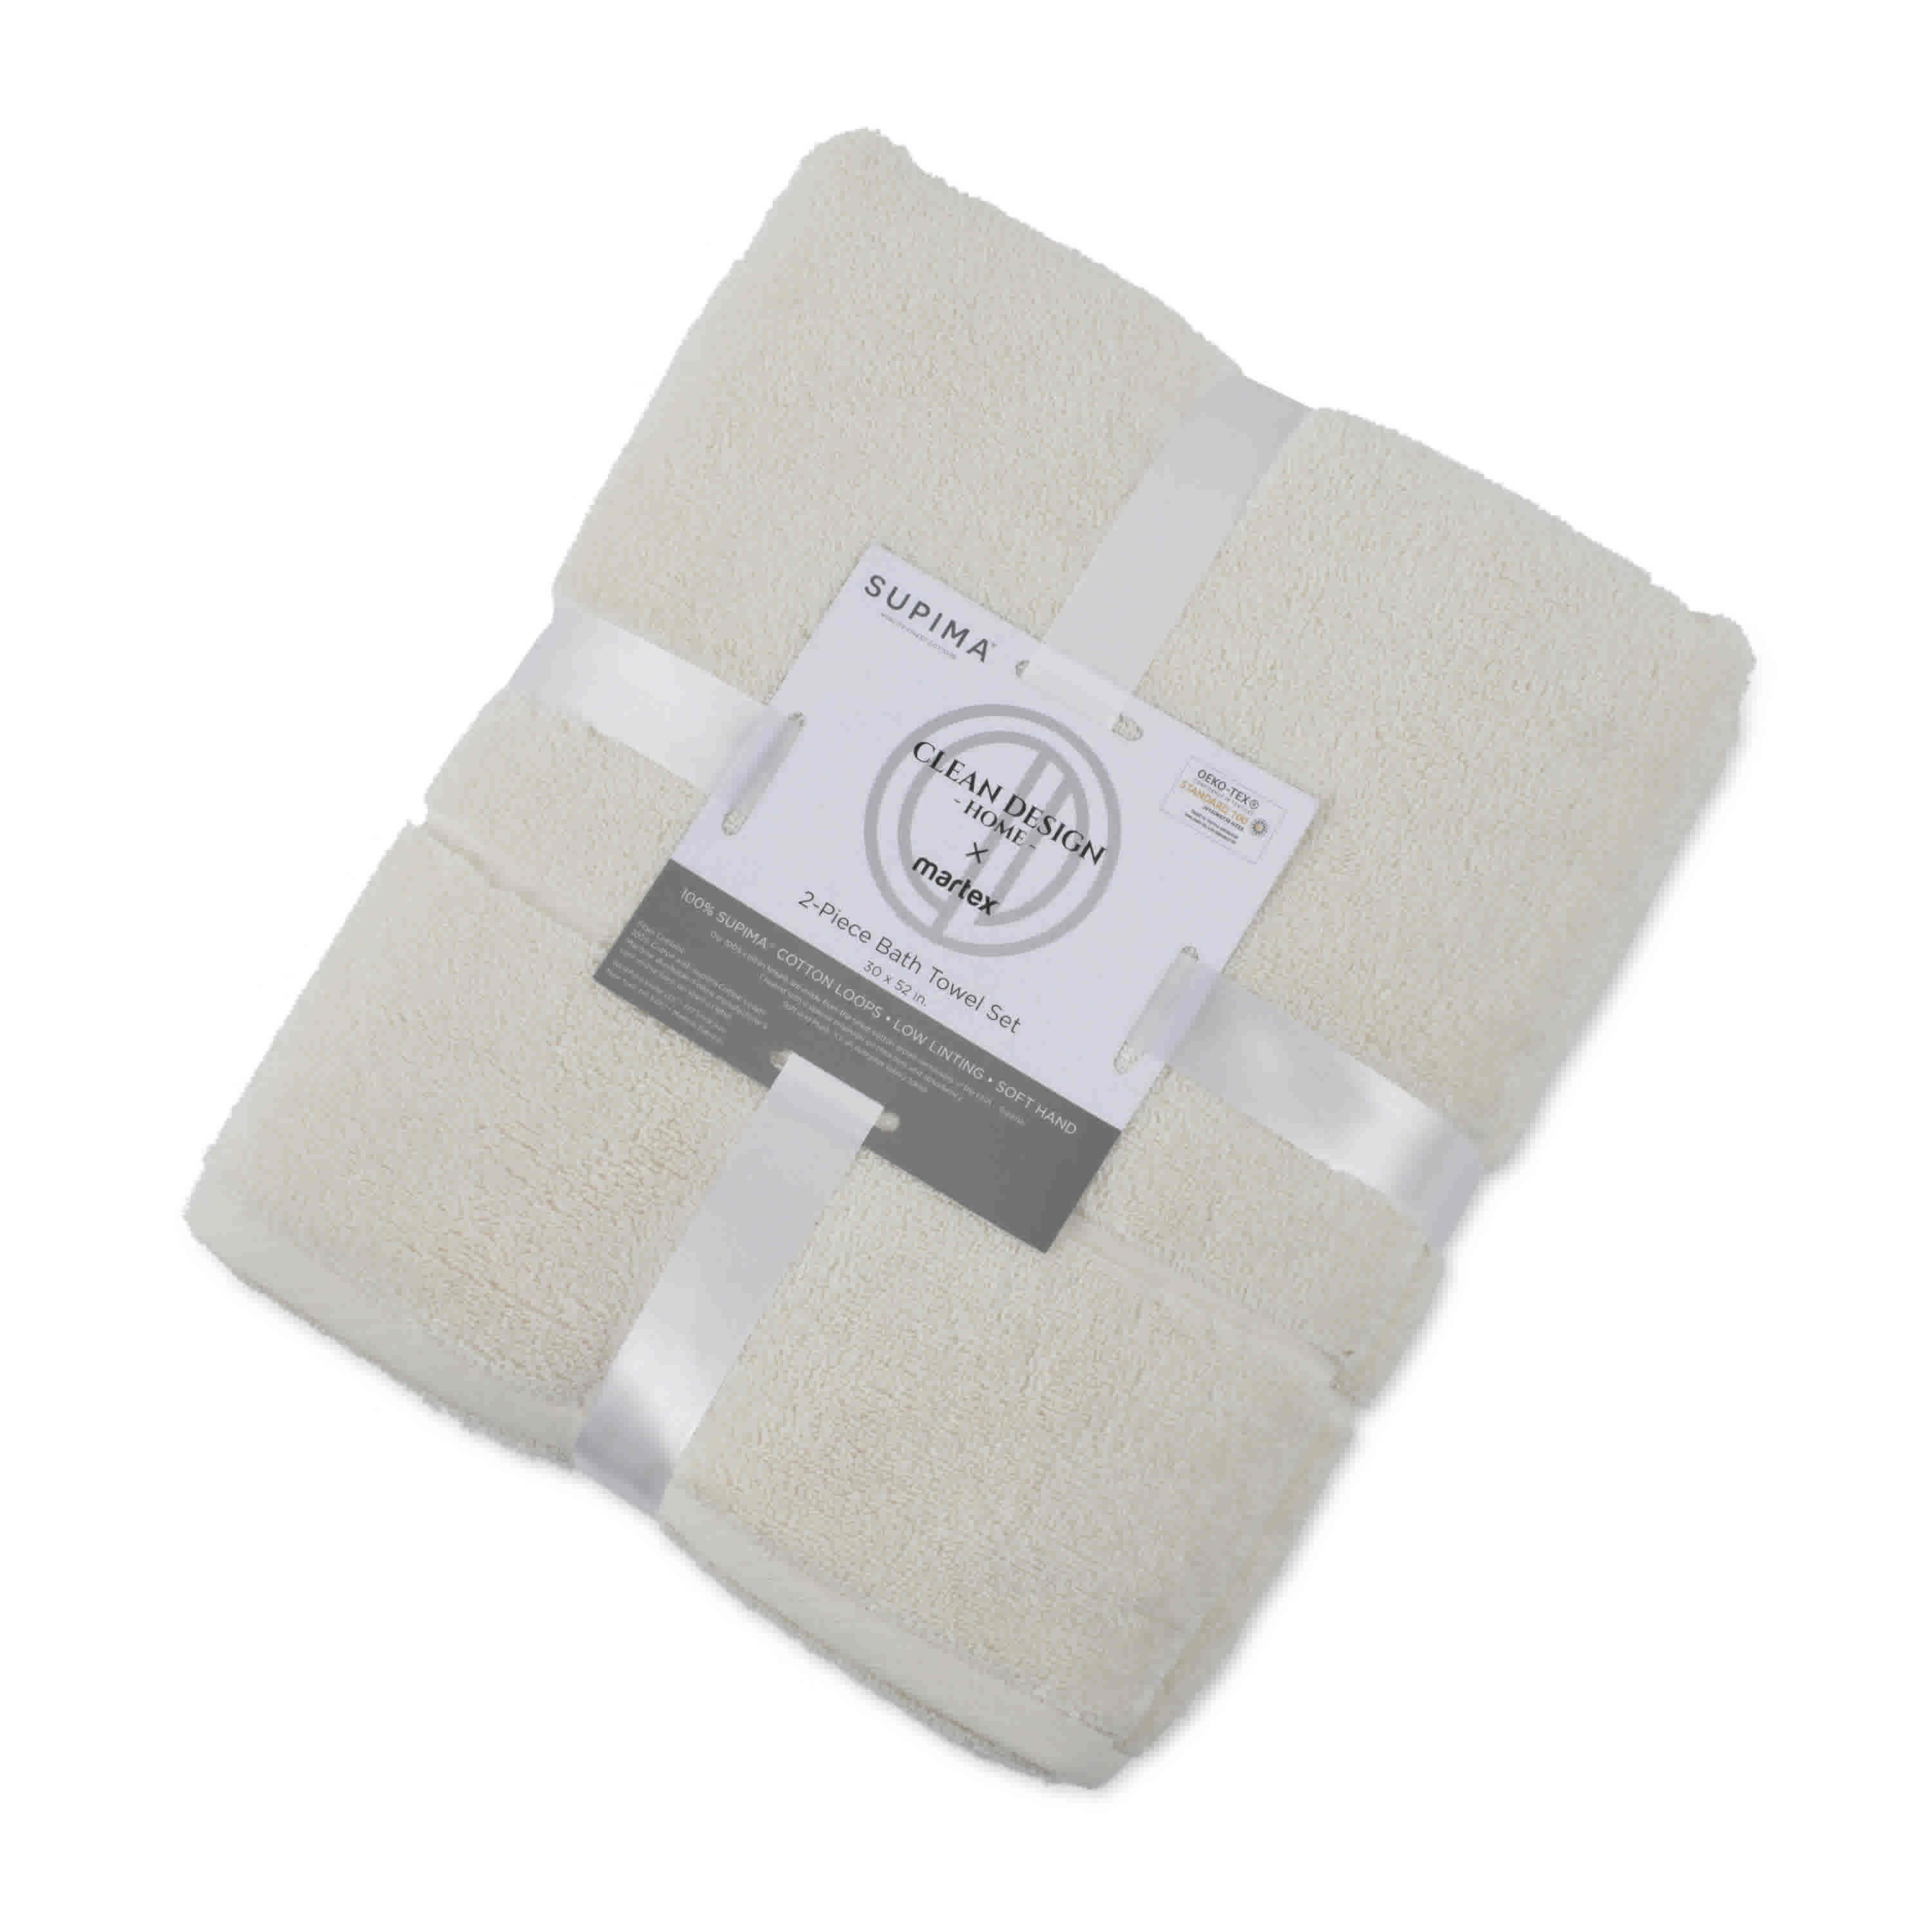 Martex Health Cotton Blend Bath Towels